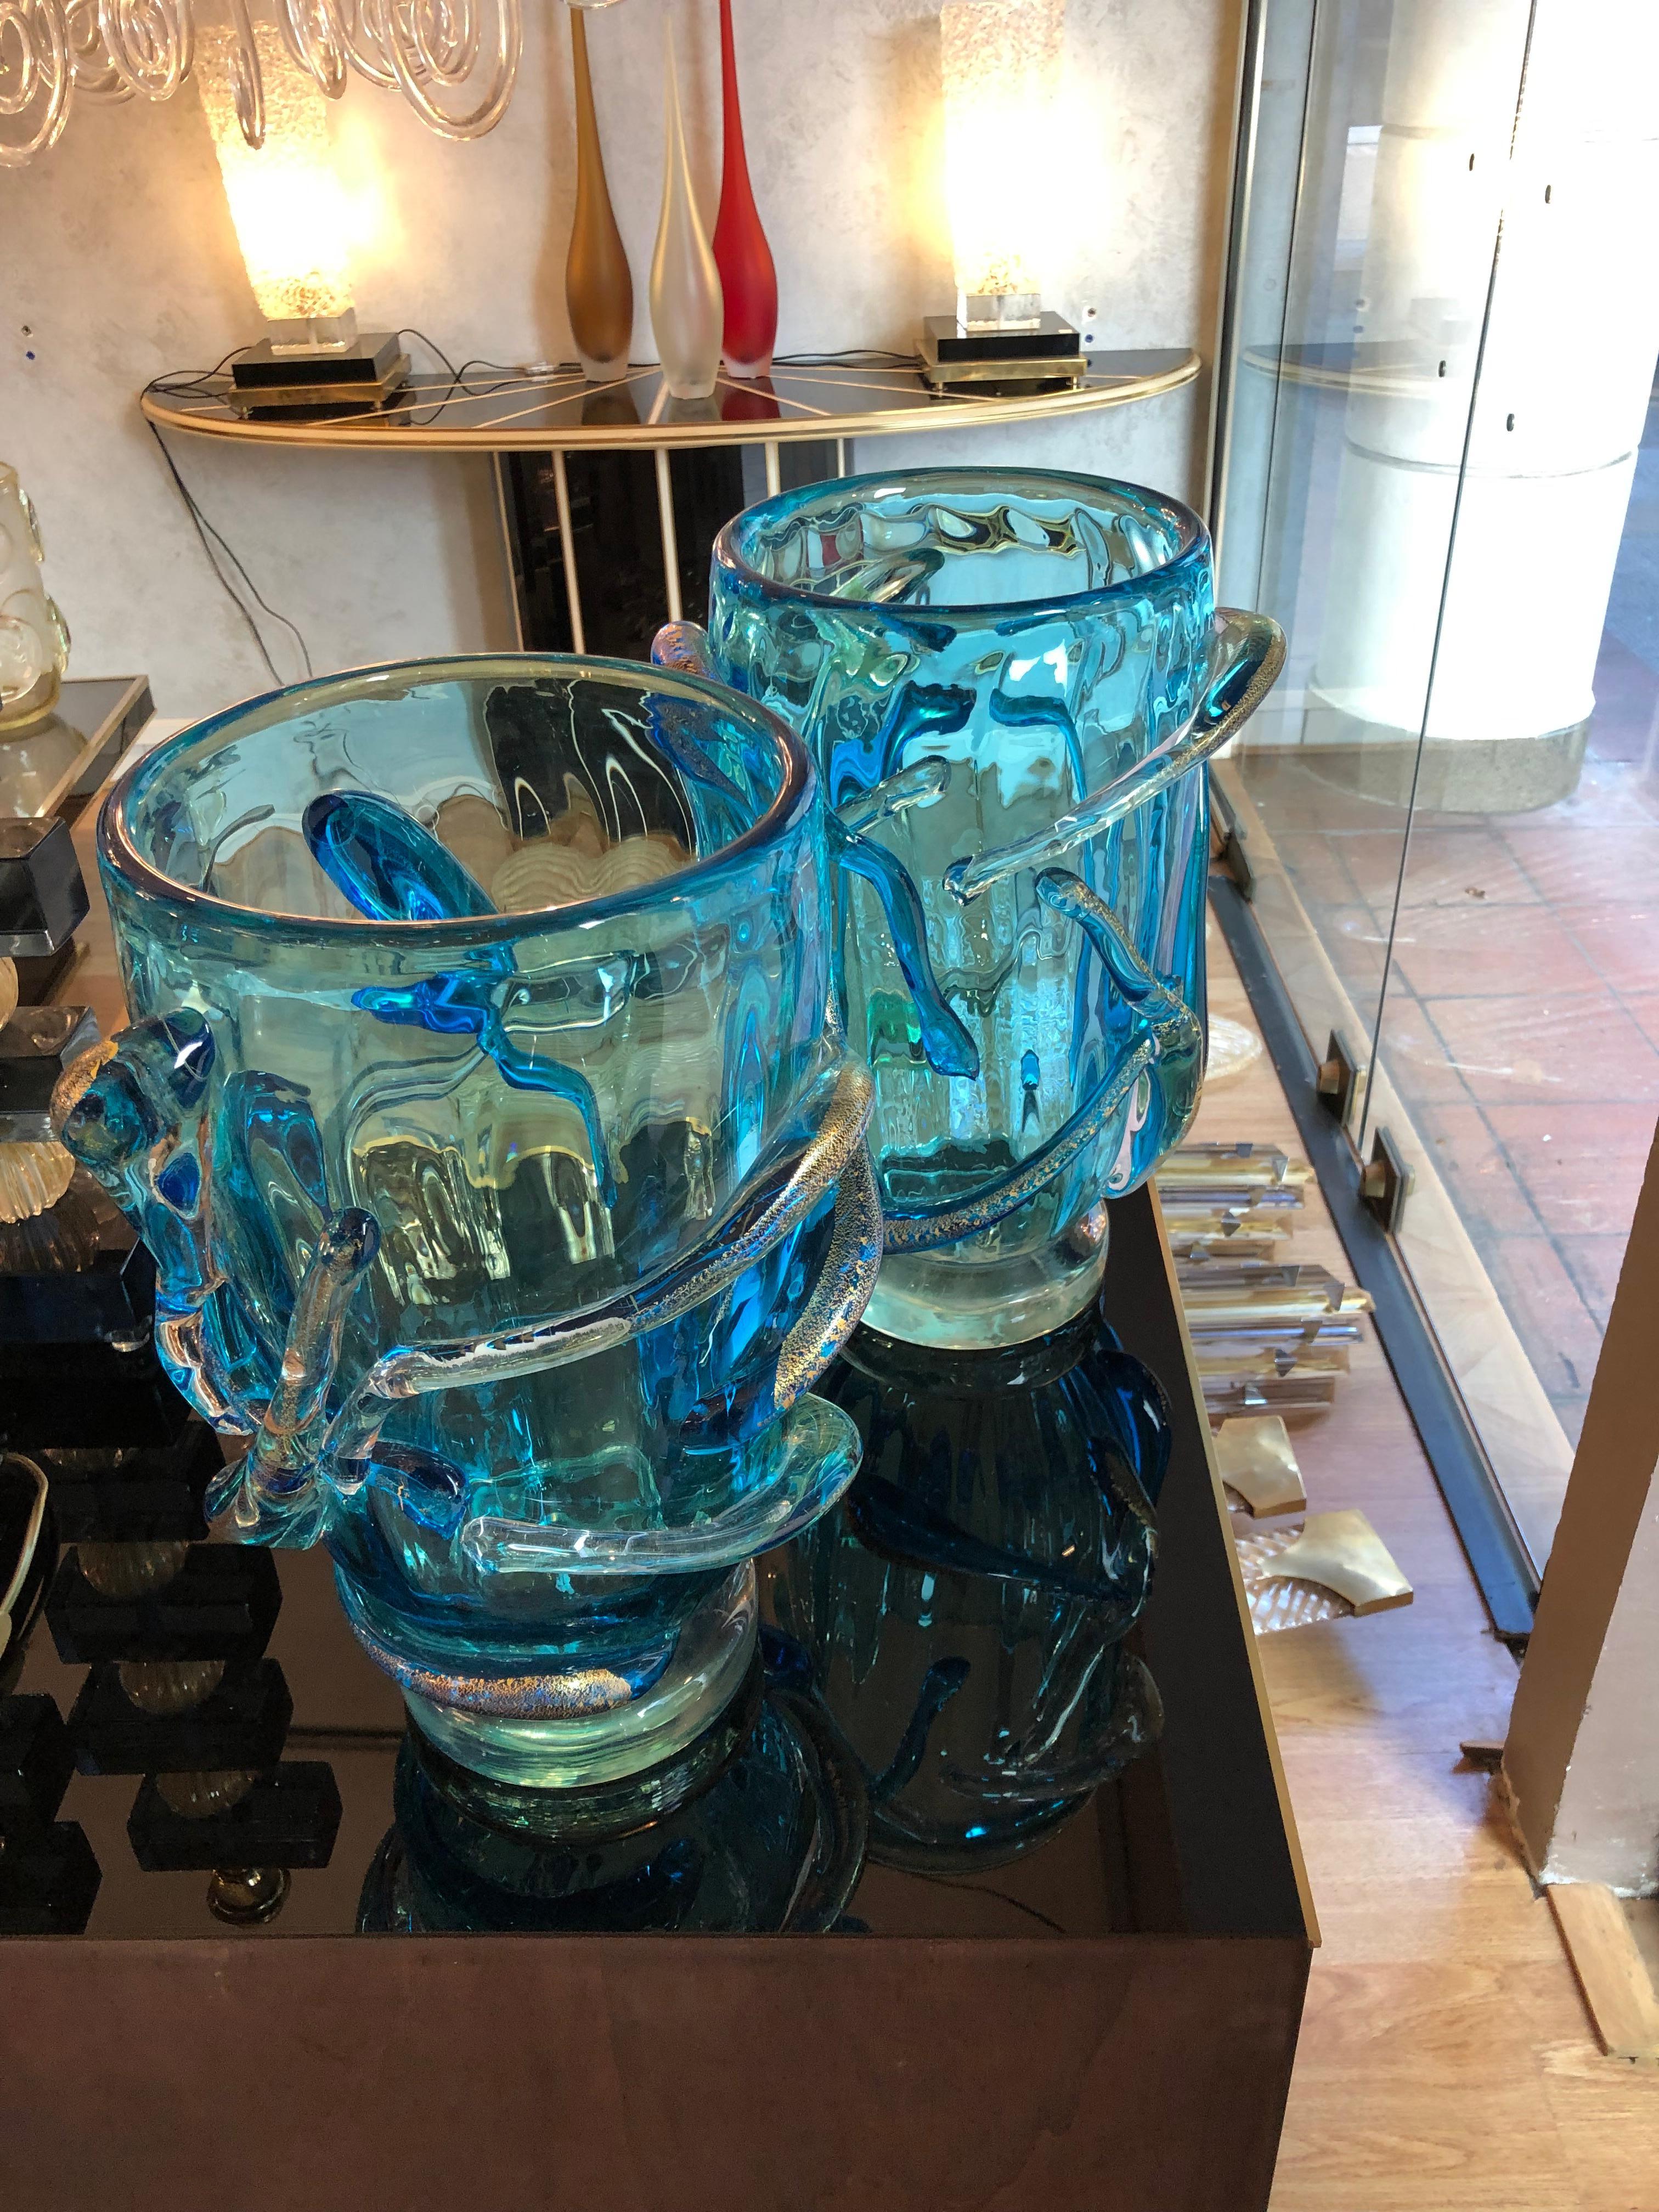 Pair of vases in Murano glass signed “Costantini Murano”.